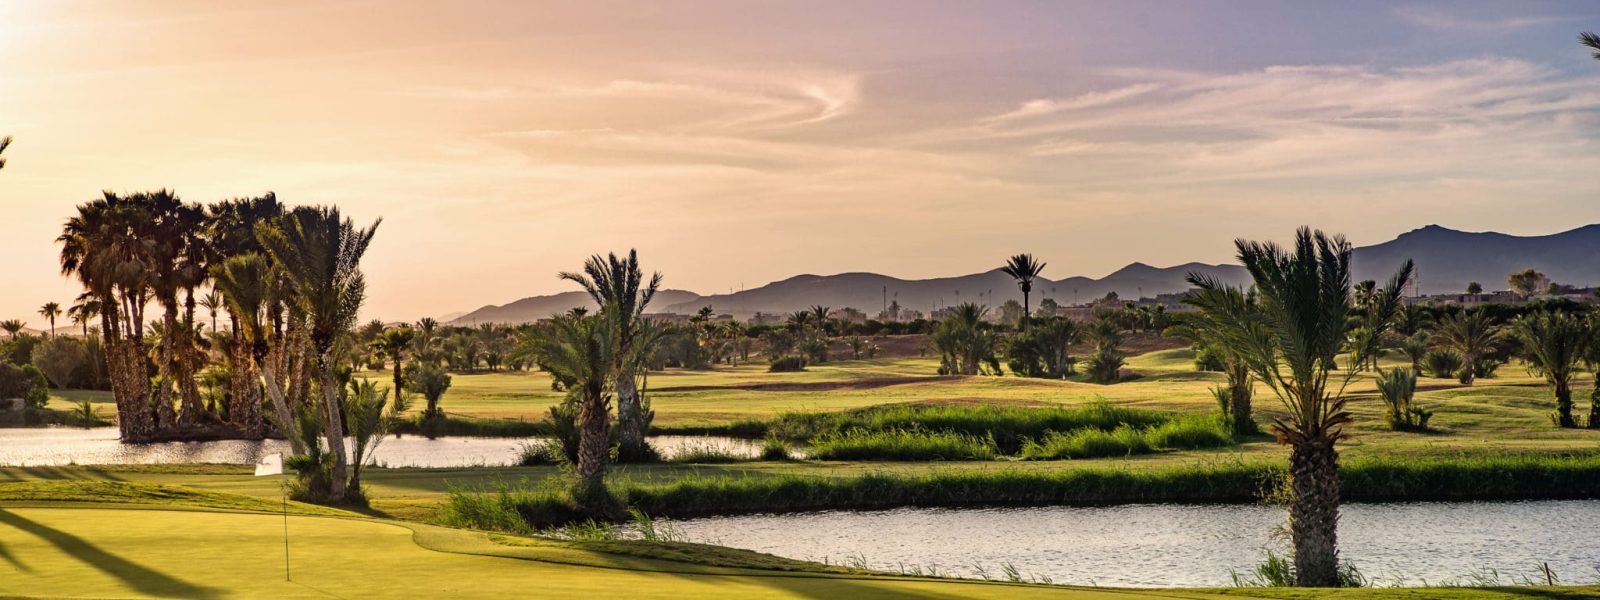 10_Marrakech_Palmeraie_Golf_Club_Rotana_Fascinations_Maroc-scaled